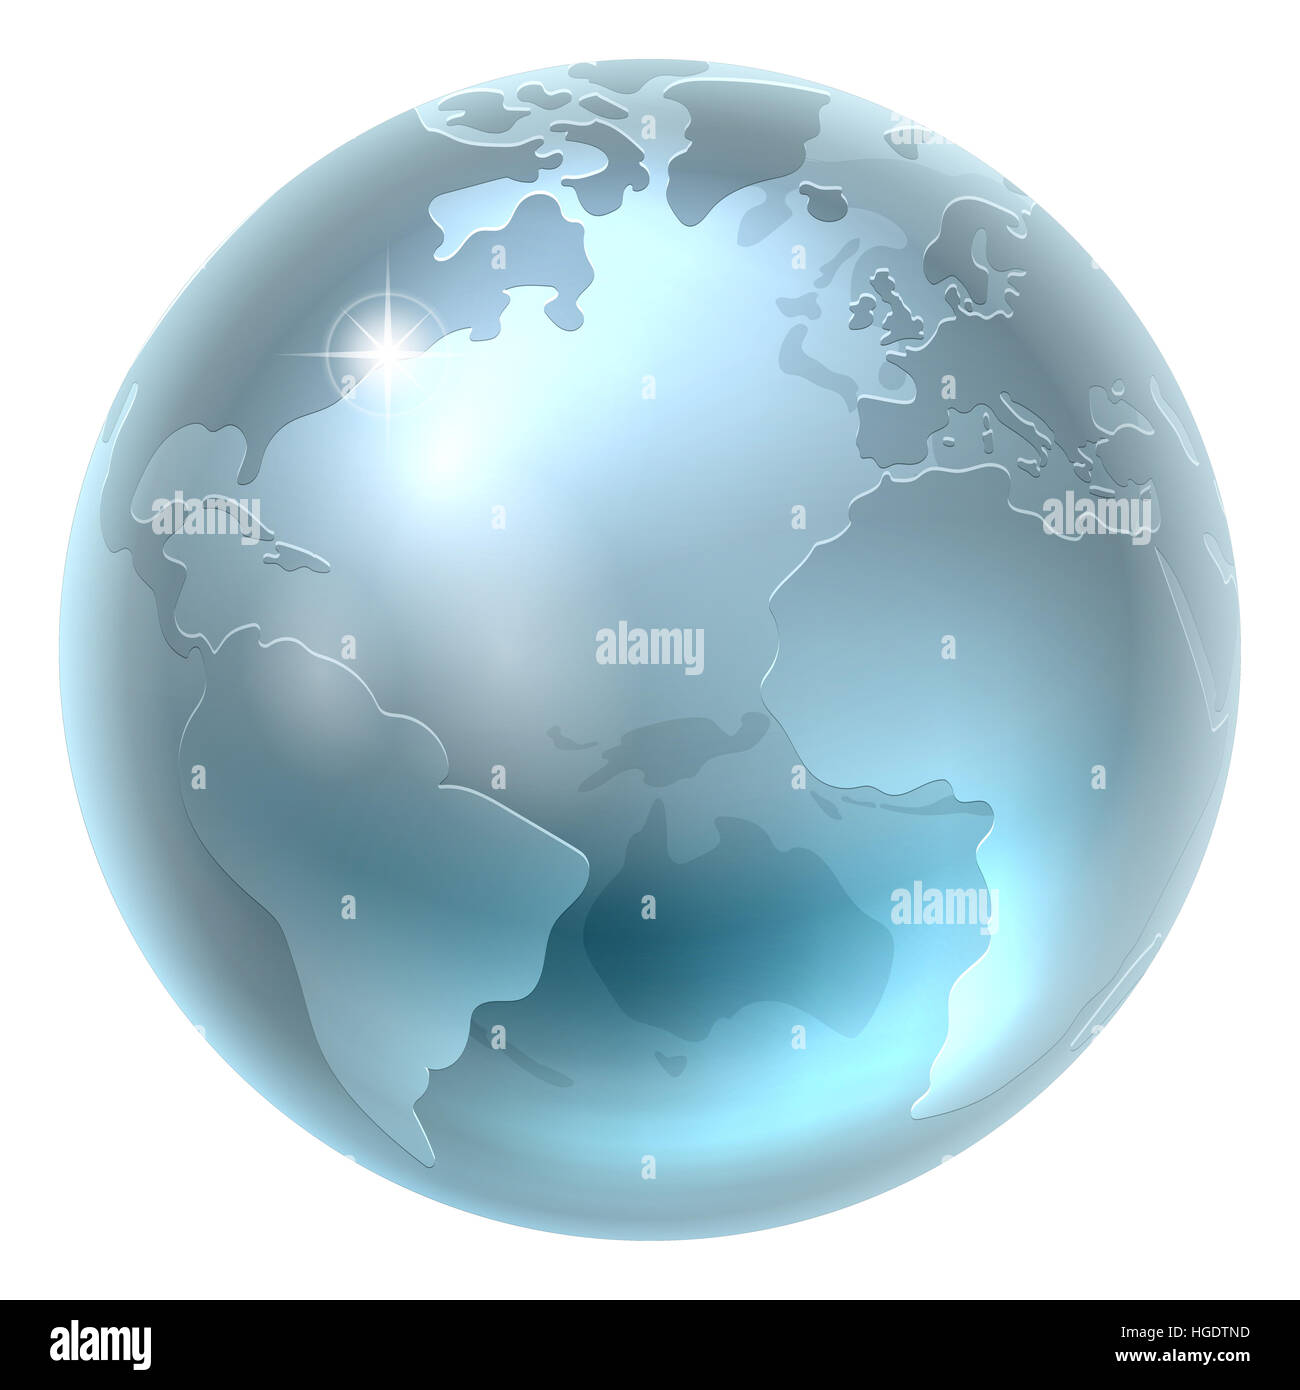 A world earth globe in a metallic silver material color Stock Photo